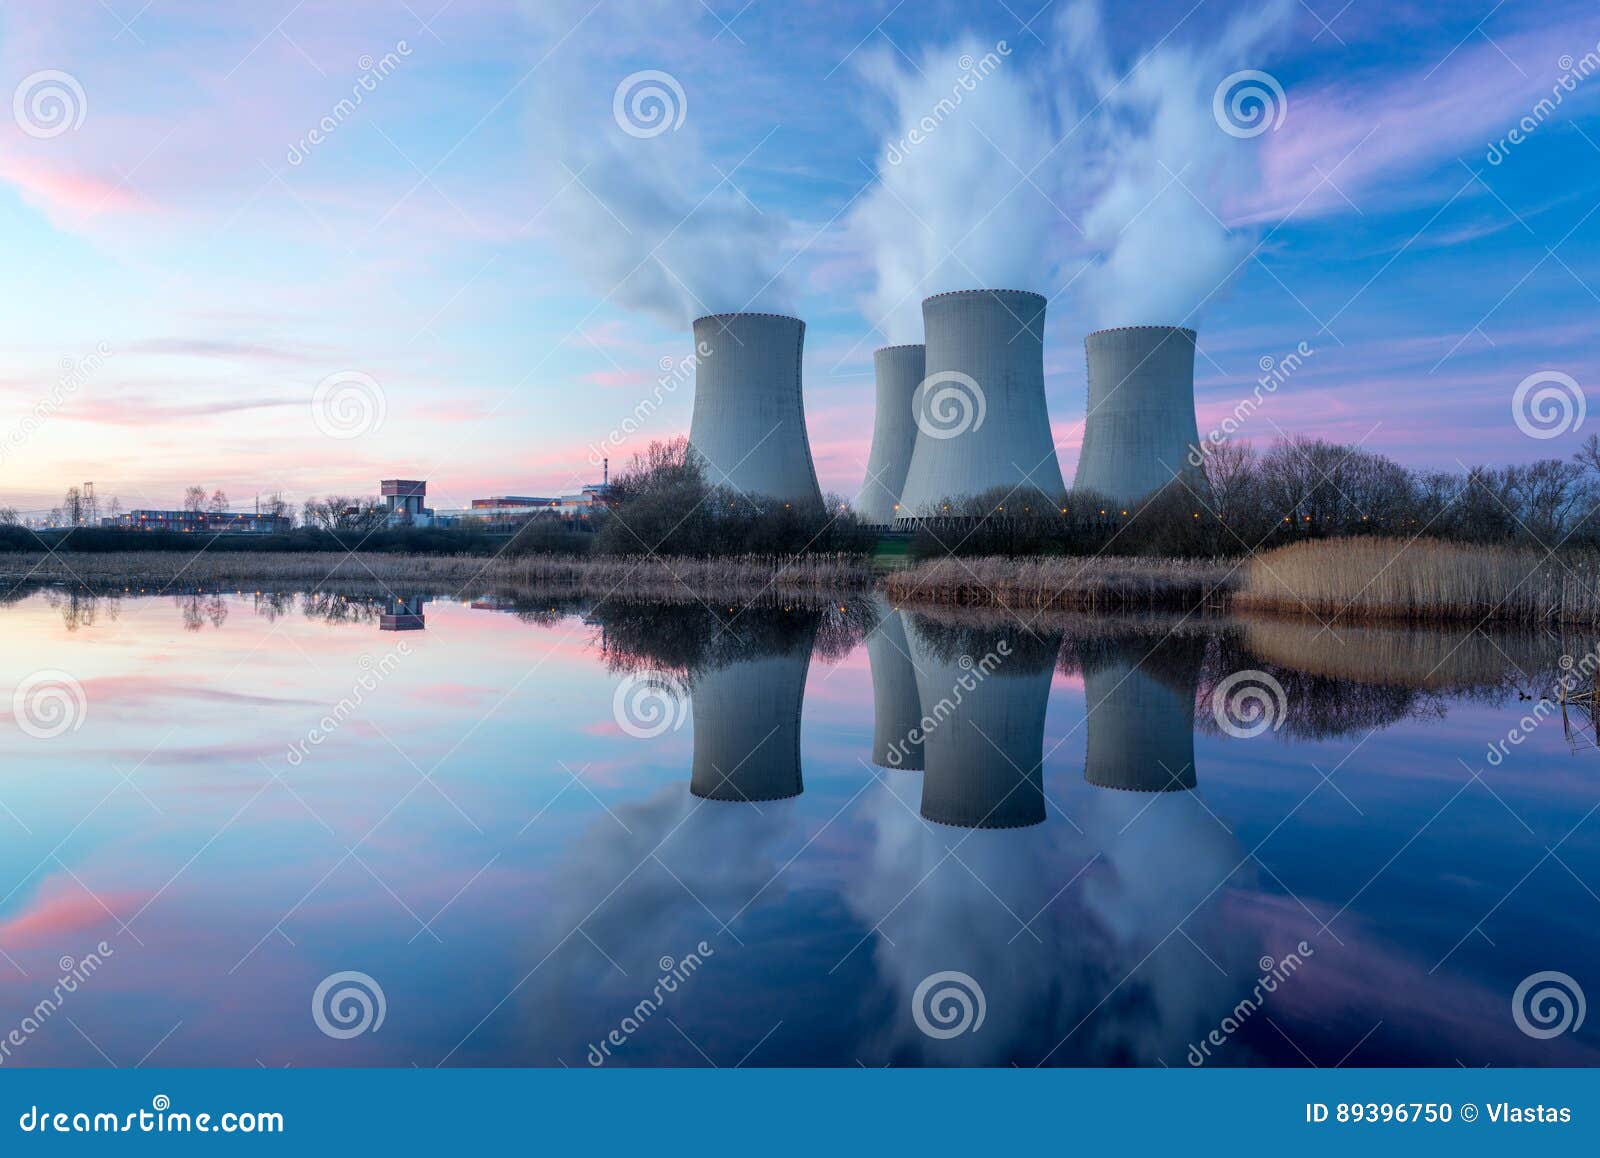 nuclear power plant with dusk landscape.